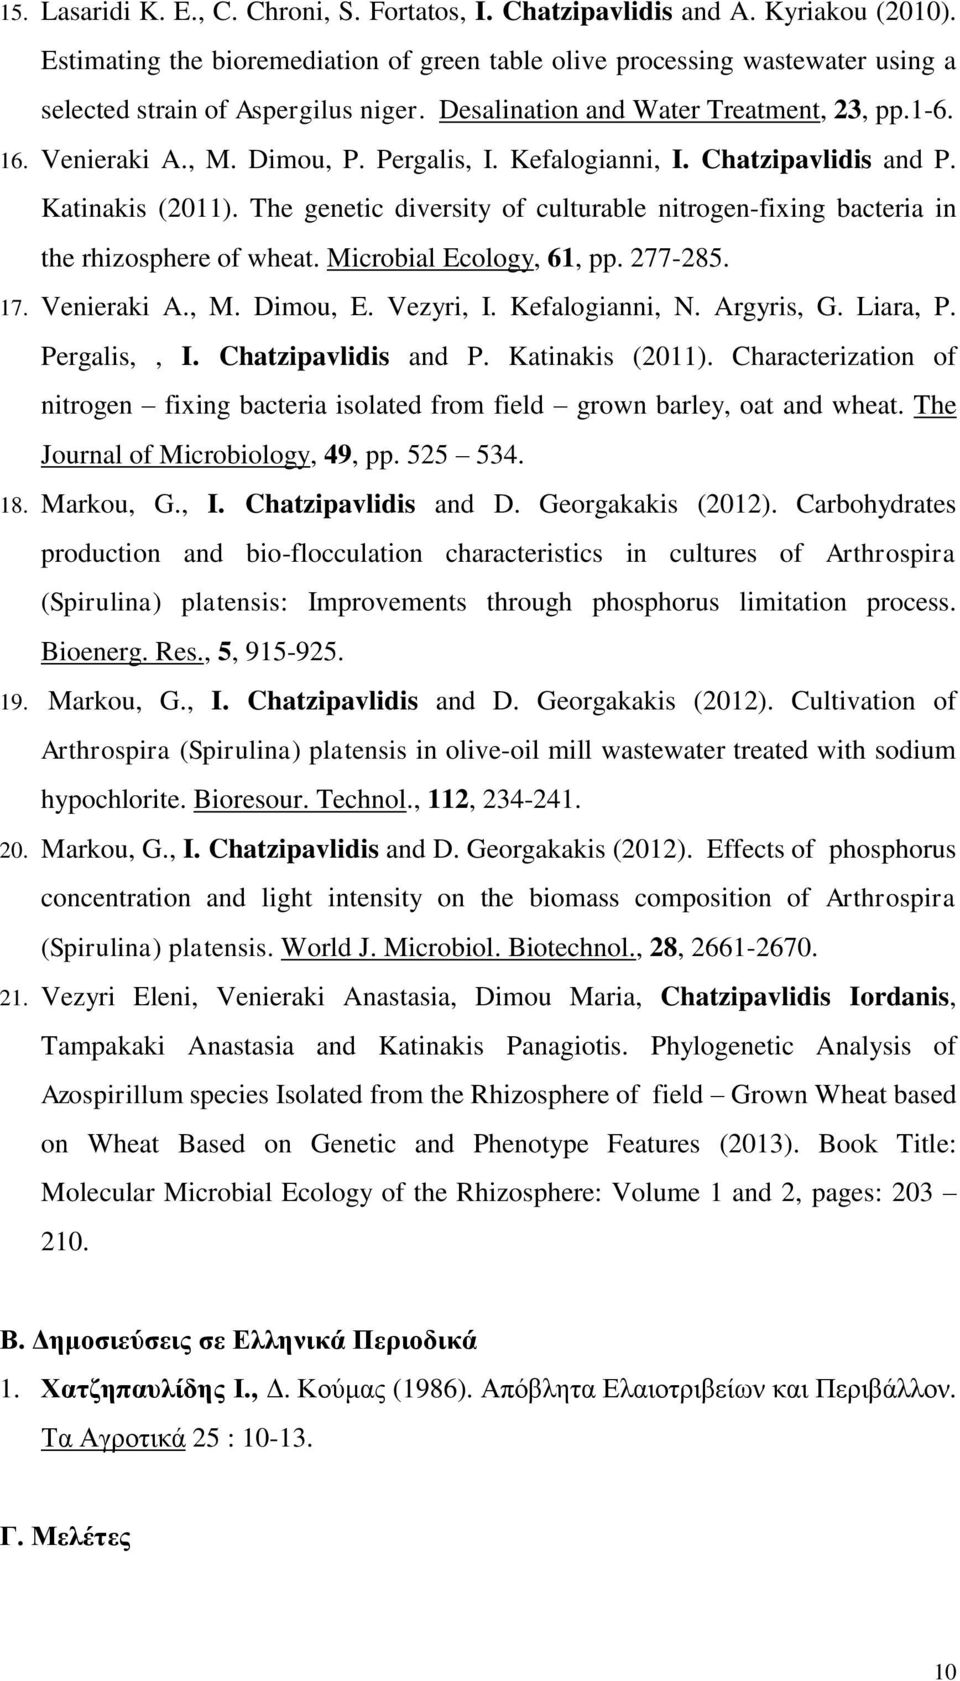 Pergalis, I. Kefalogianni, I. Chatzipavlidis and P. Katinakis (2011). The genetic diversity of culturable nitrogen-fixing bacteria in the rhizosphere of wheat. Microbial Ecology, 61, pp. 277-285. 17.